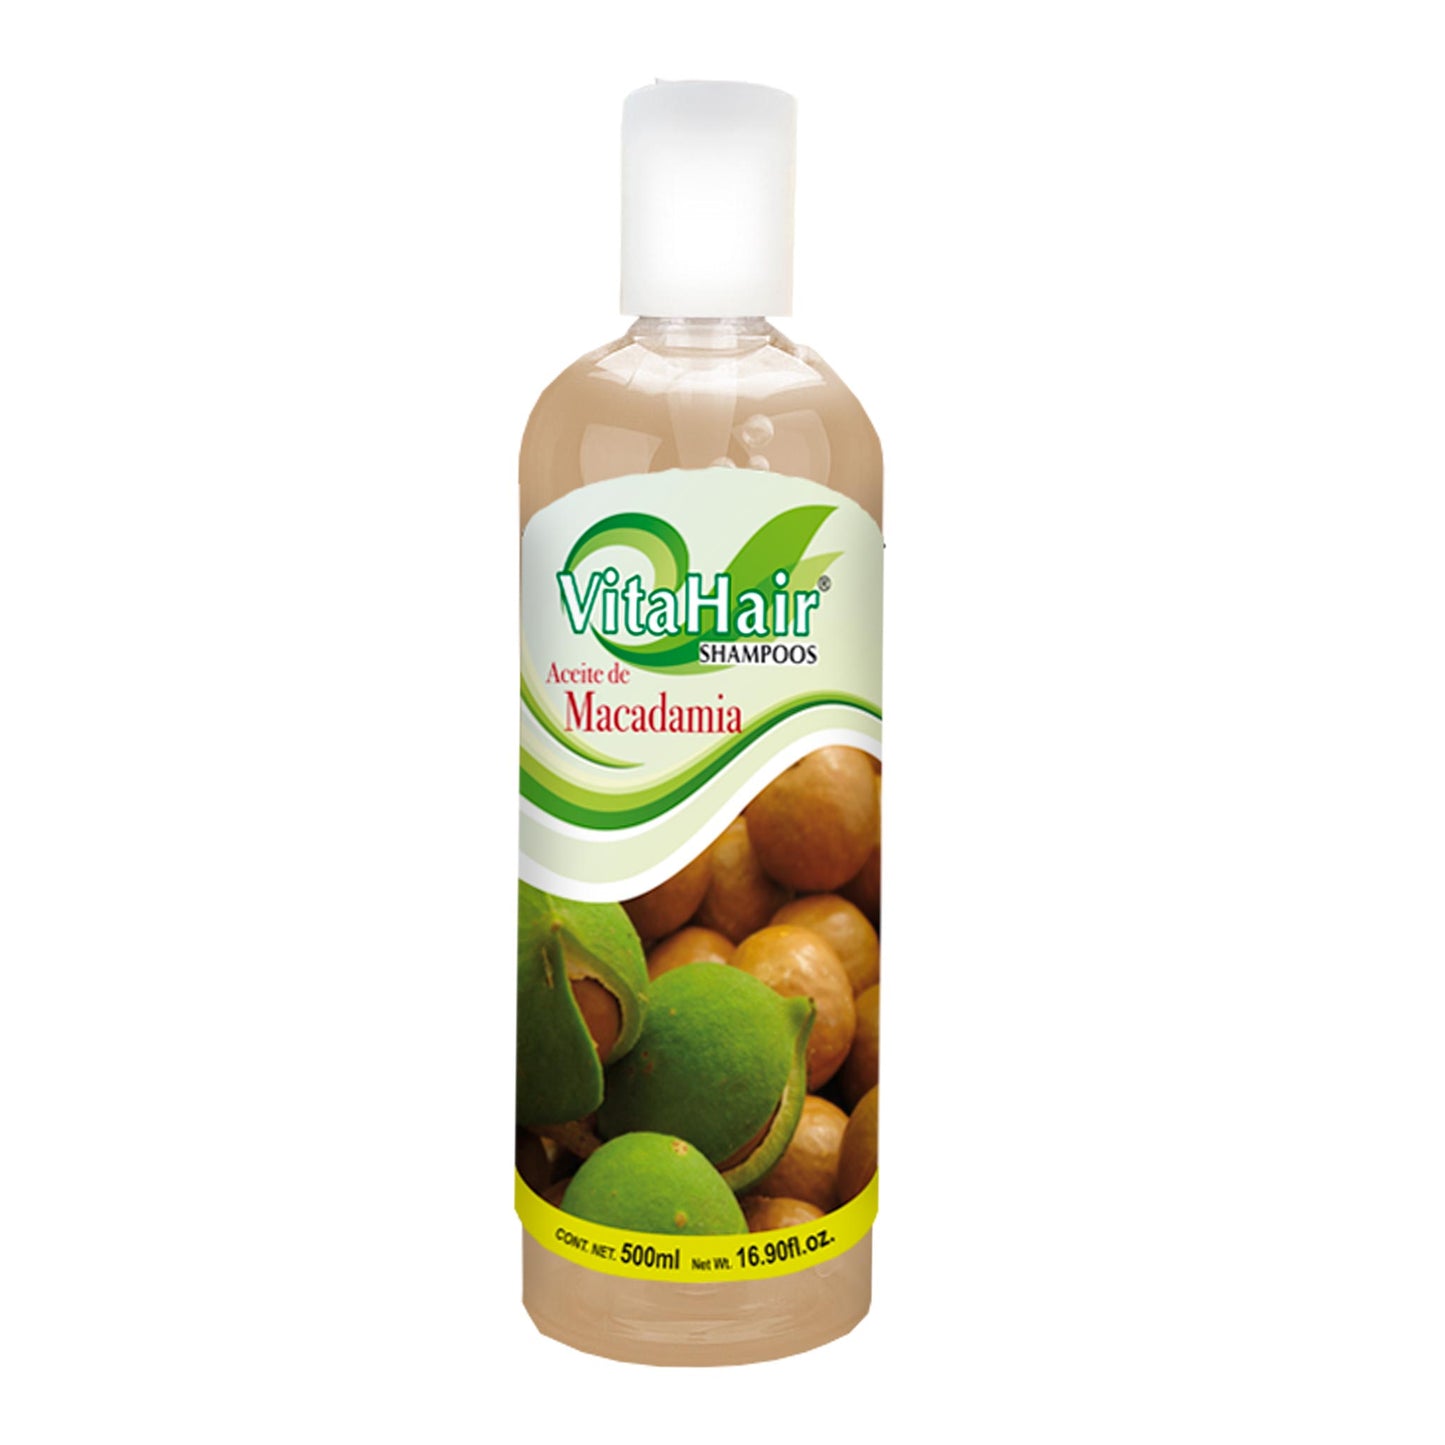 VITAHAIR ® shampoo de macadamia 500ml